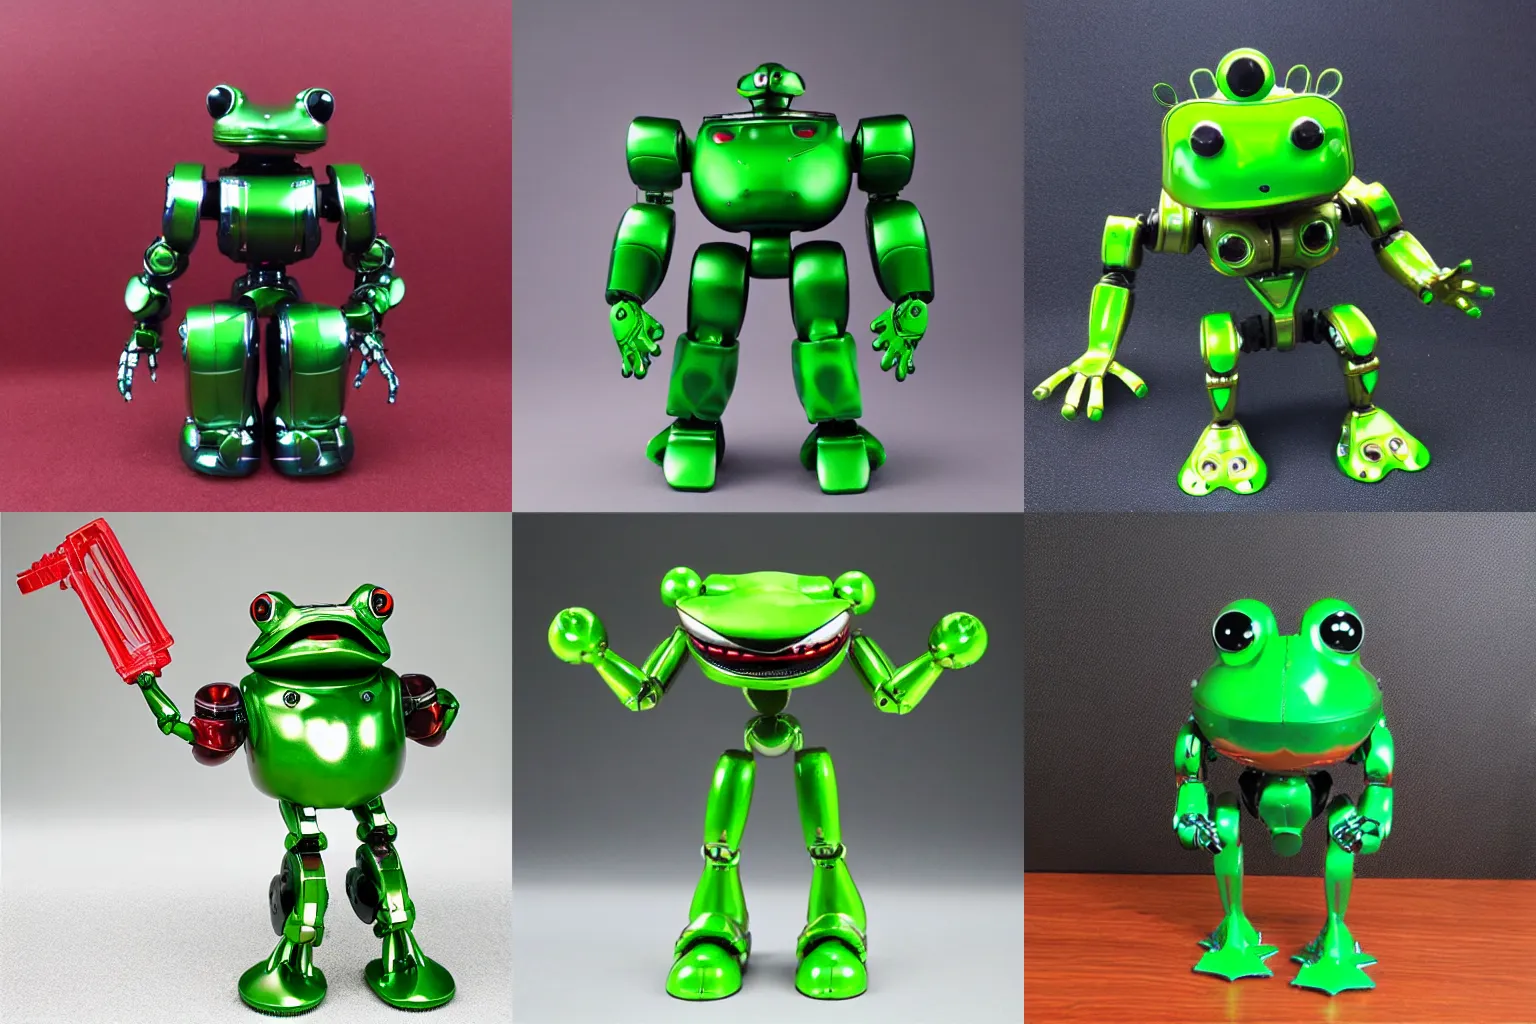 Prompt: green chogokin bipedal standing robot frog toy, die - cast metal, plastic, chrome, super robot